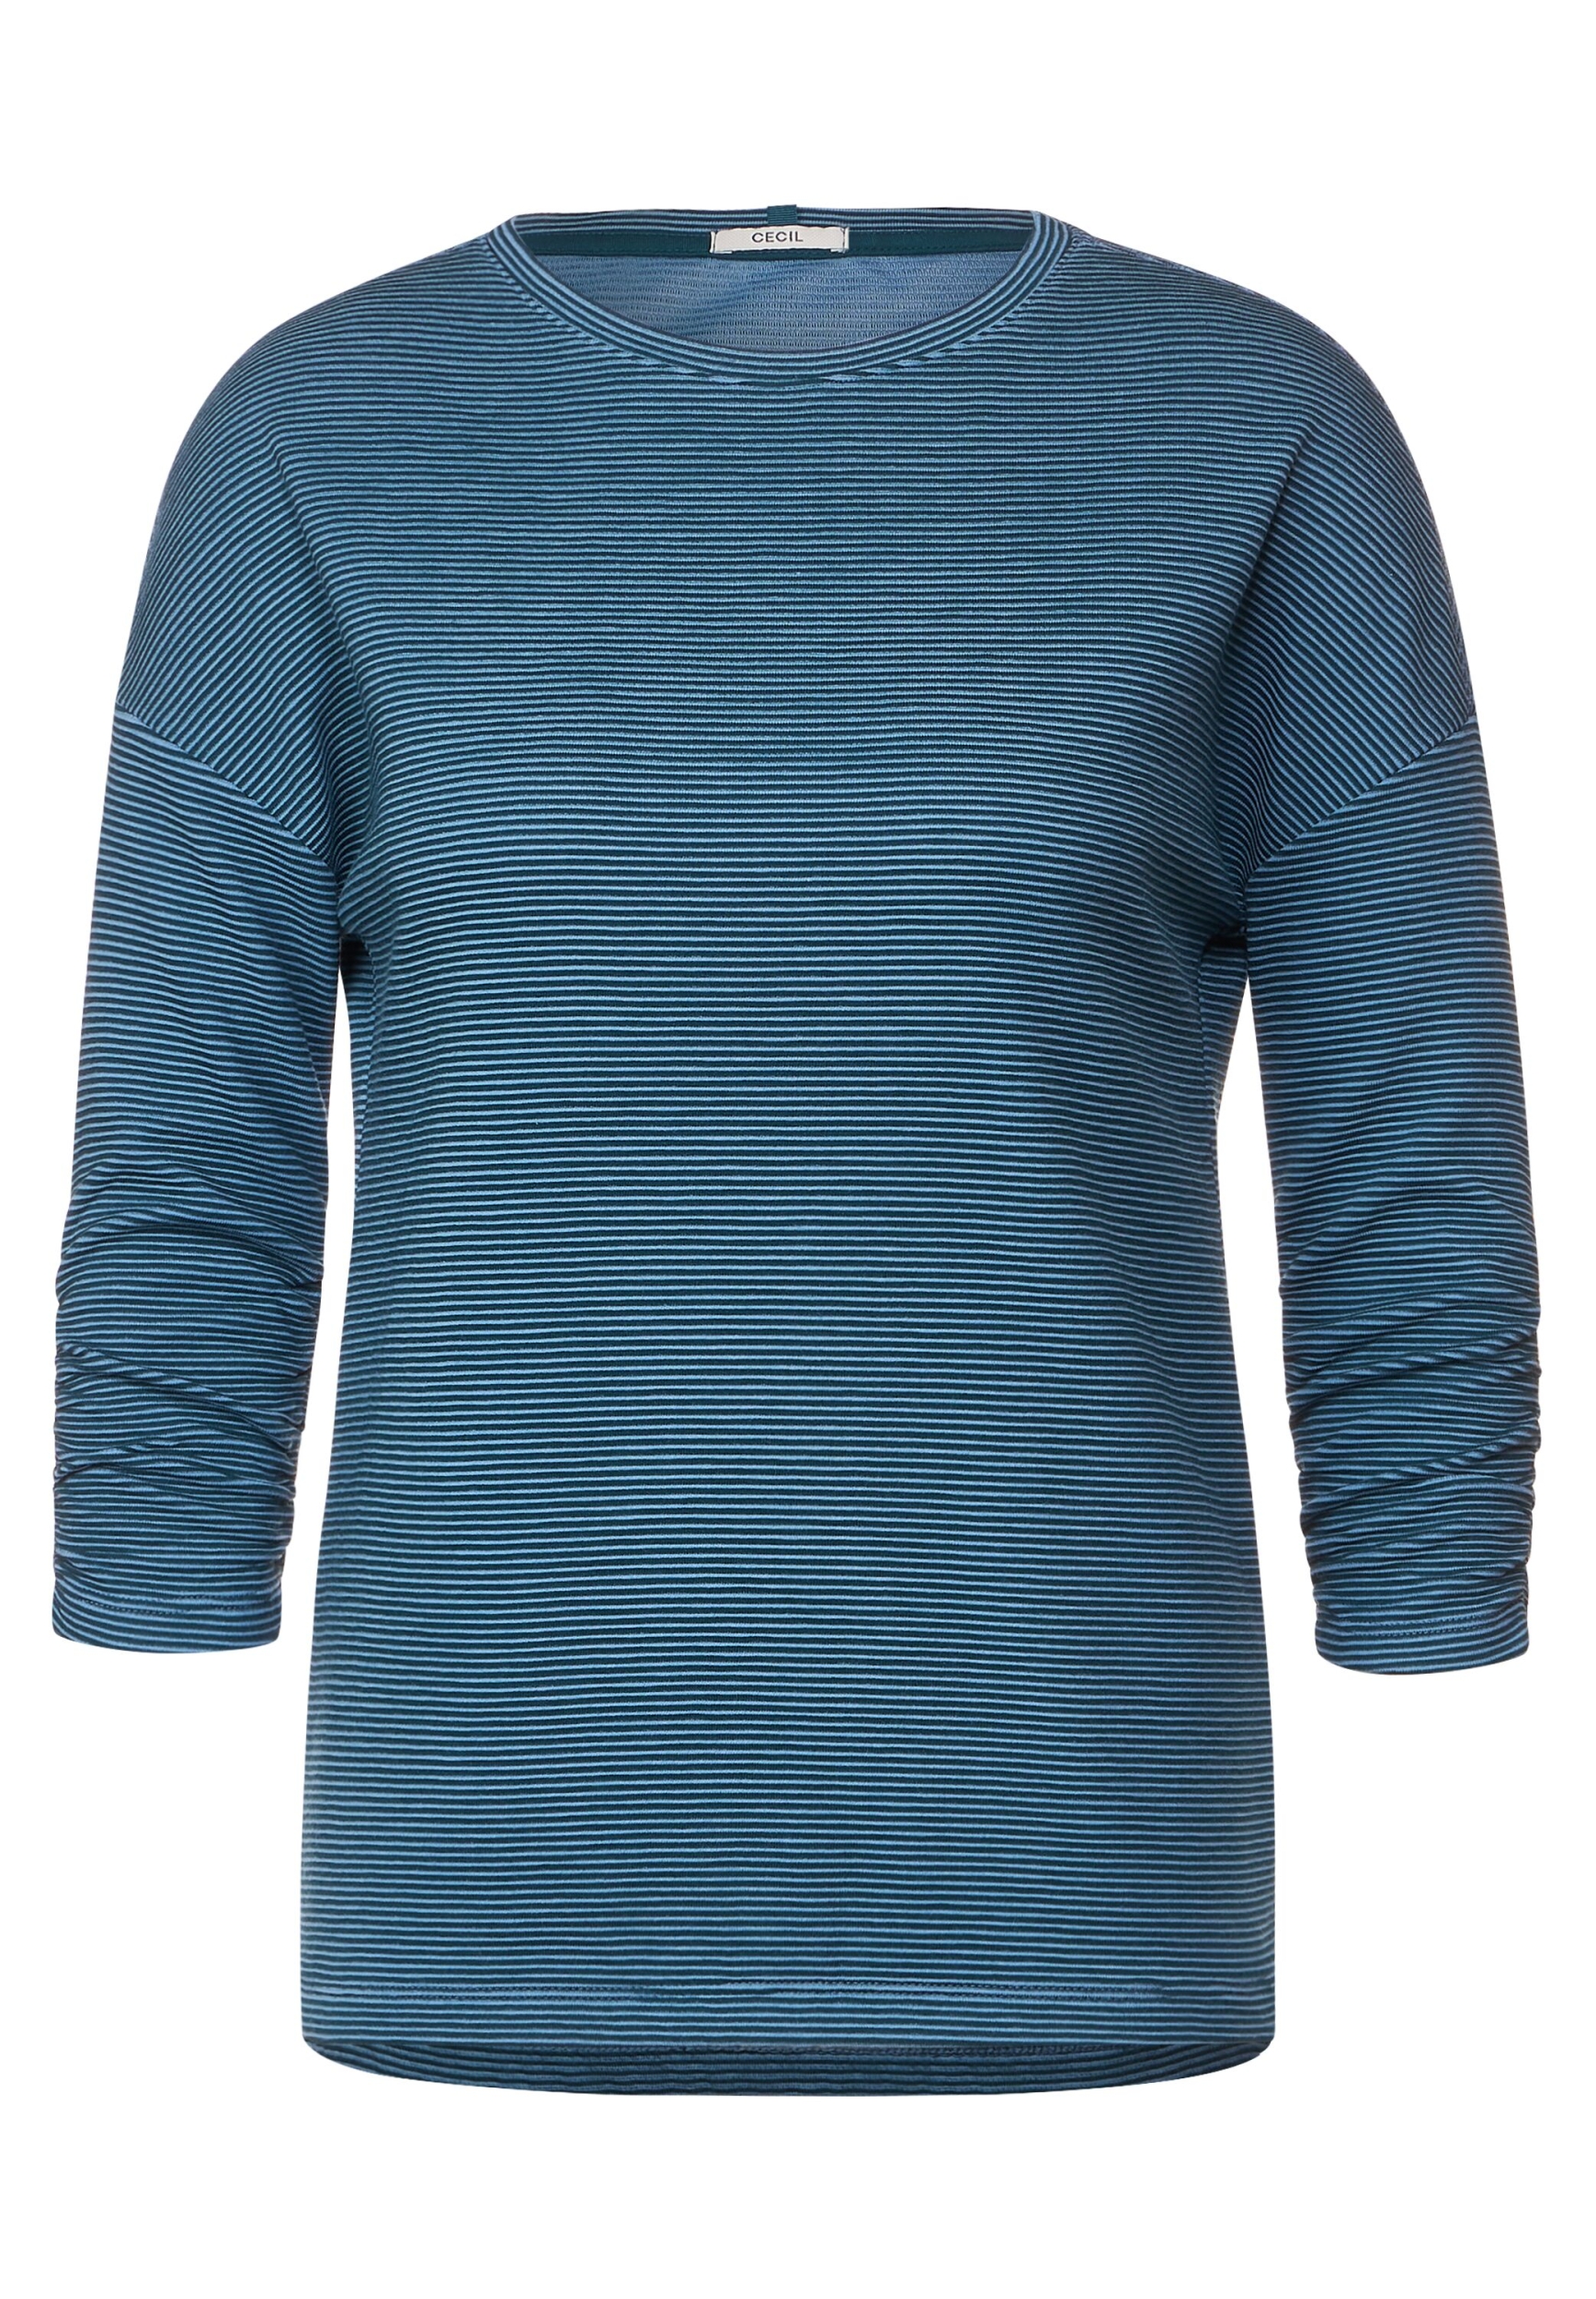 A319585-14510-40 shirt LTD blue v-neck linen 40 | | QR | look splash